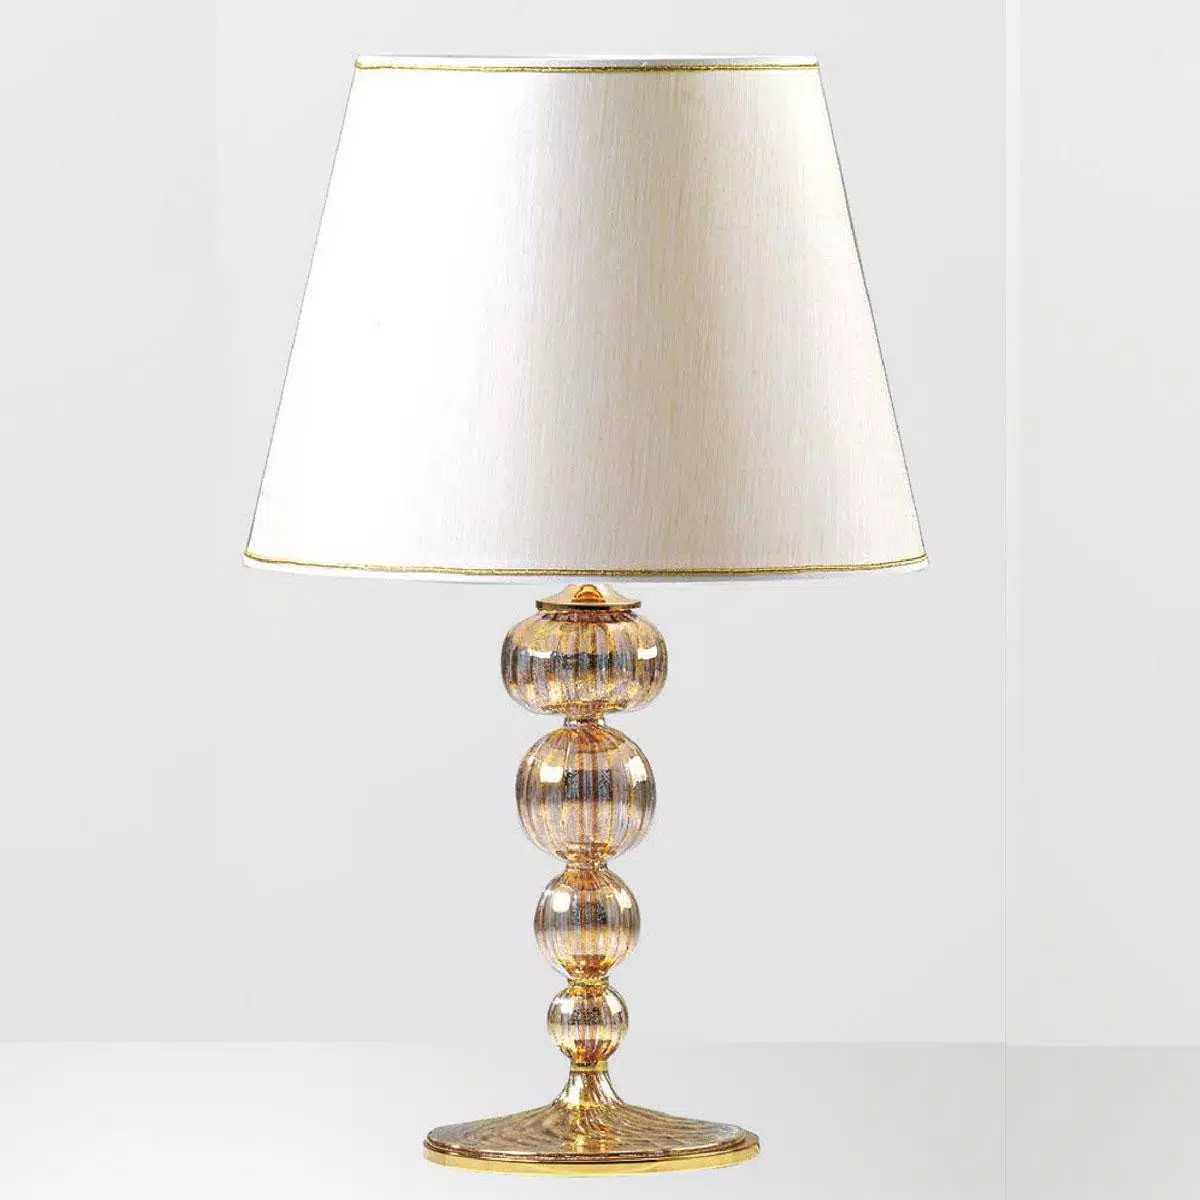 "Alayah" Murano glass table lamp - 1 light - gold